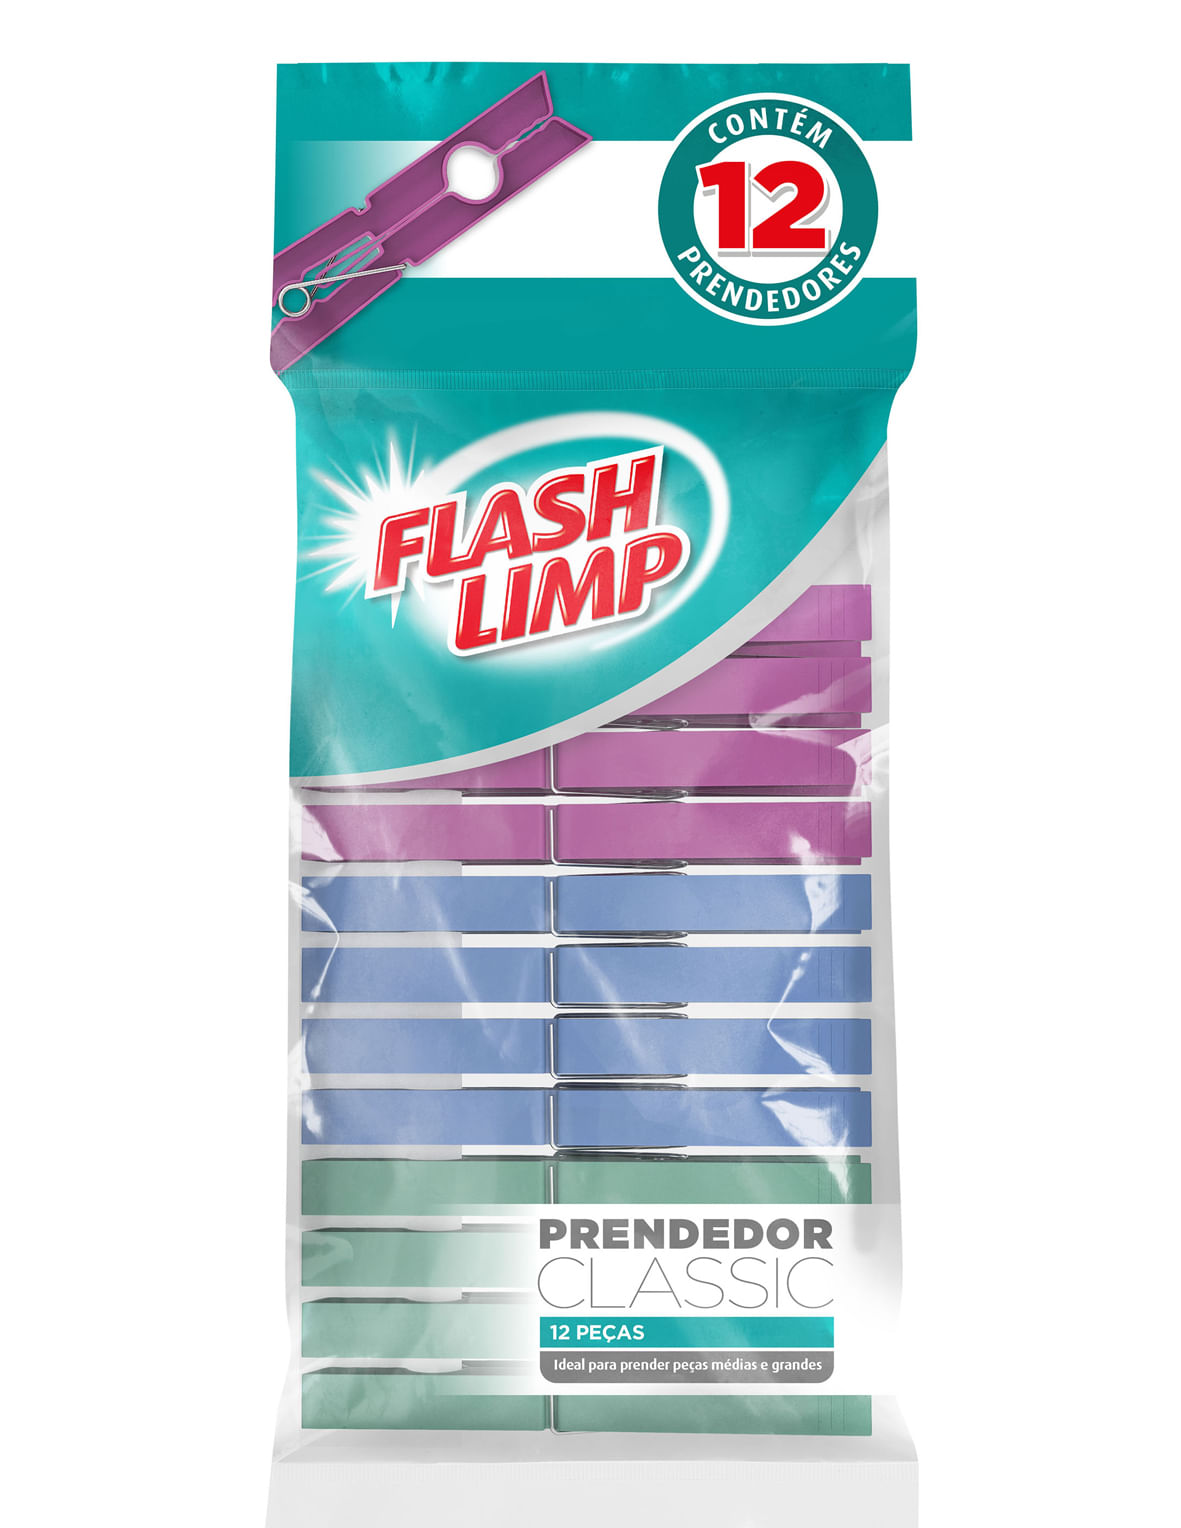 Conjunto 12 Prendedores Classic Flash Limp